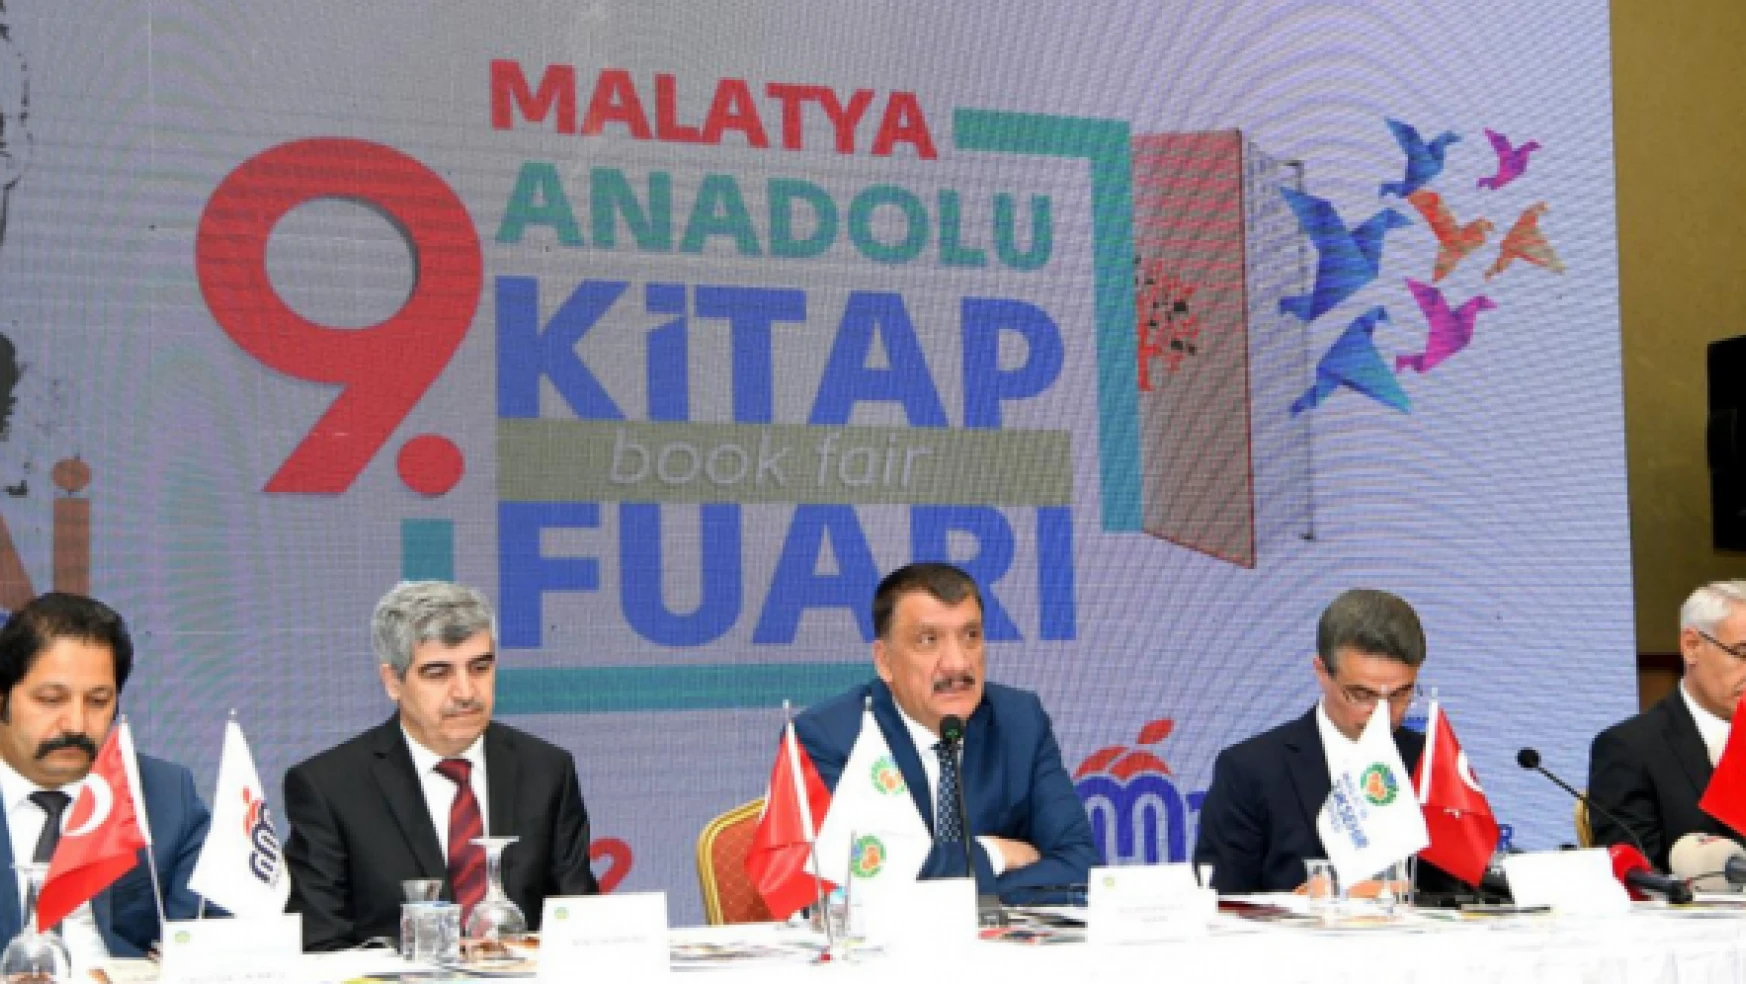 Malatya Anadolu Kitap Fuarı bugün açıldı